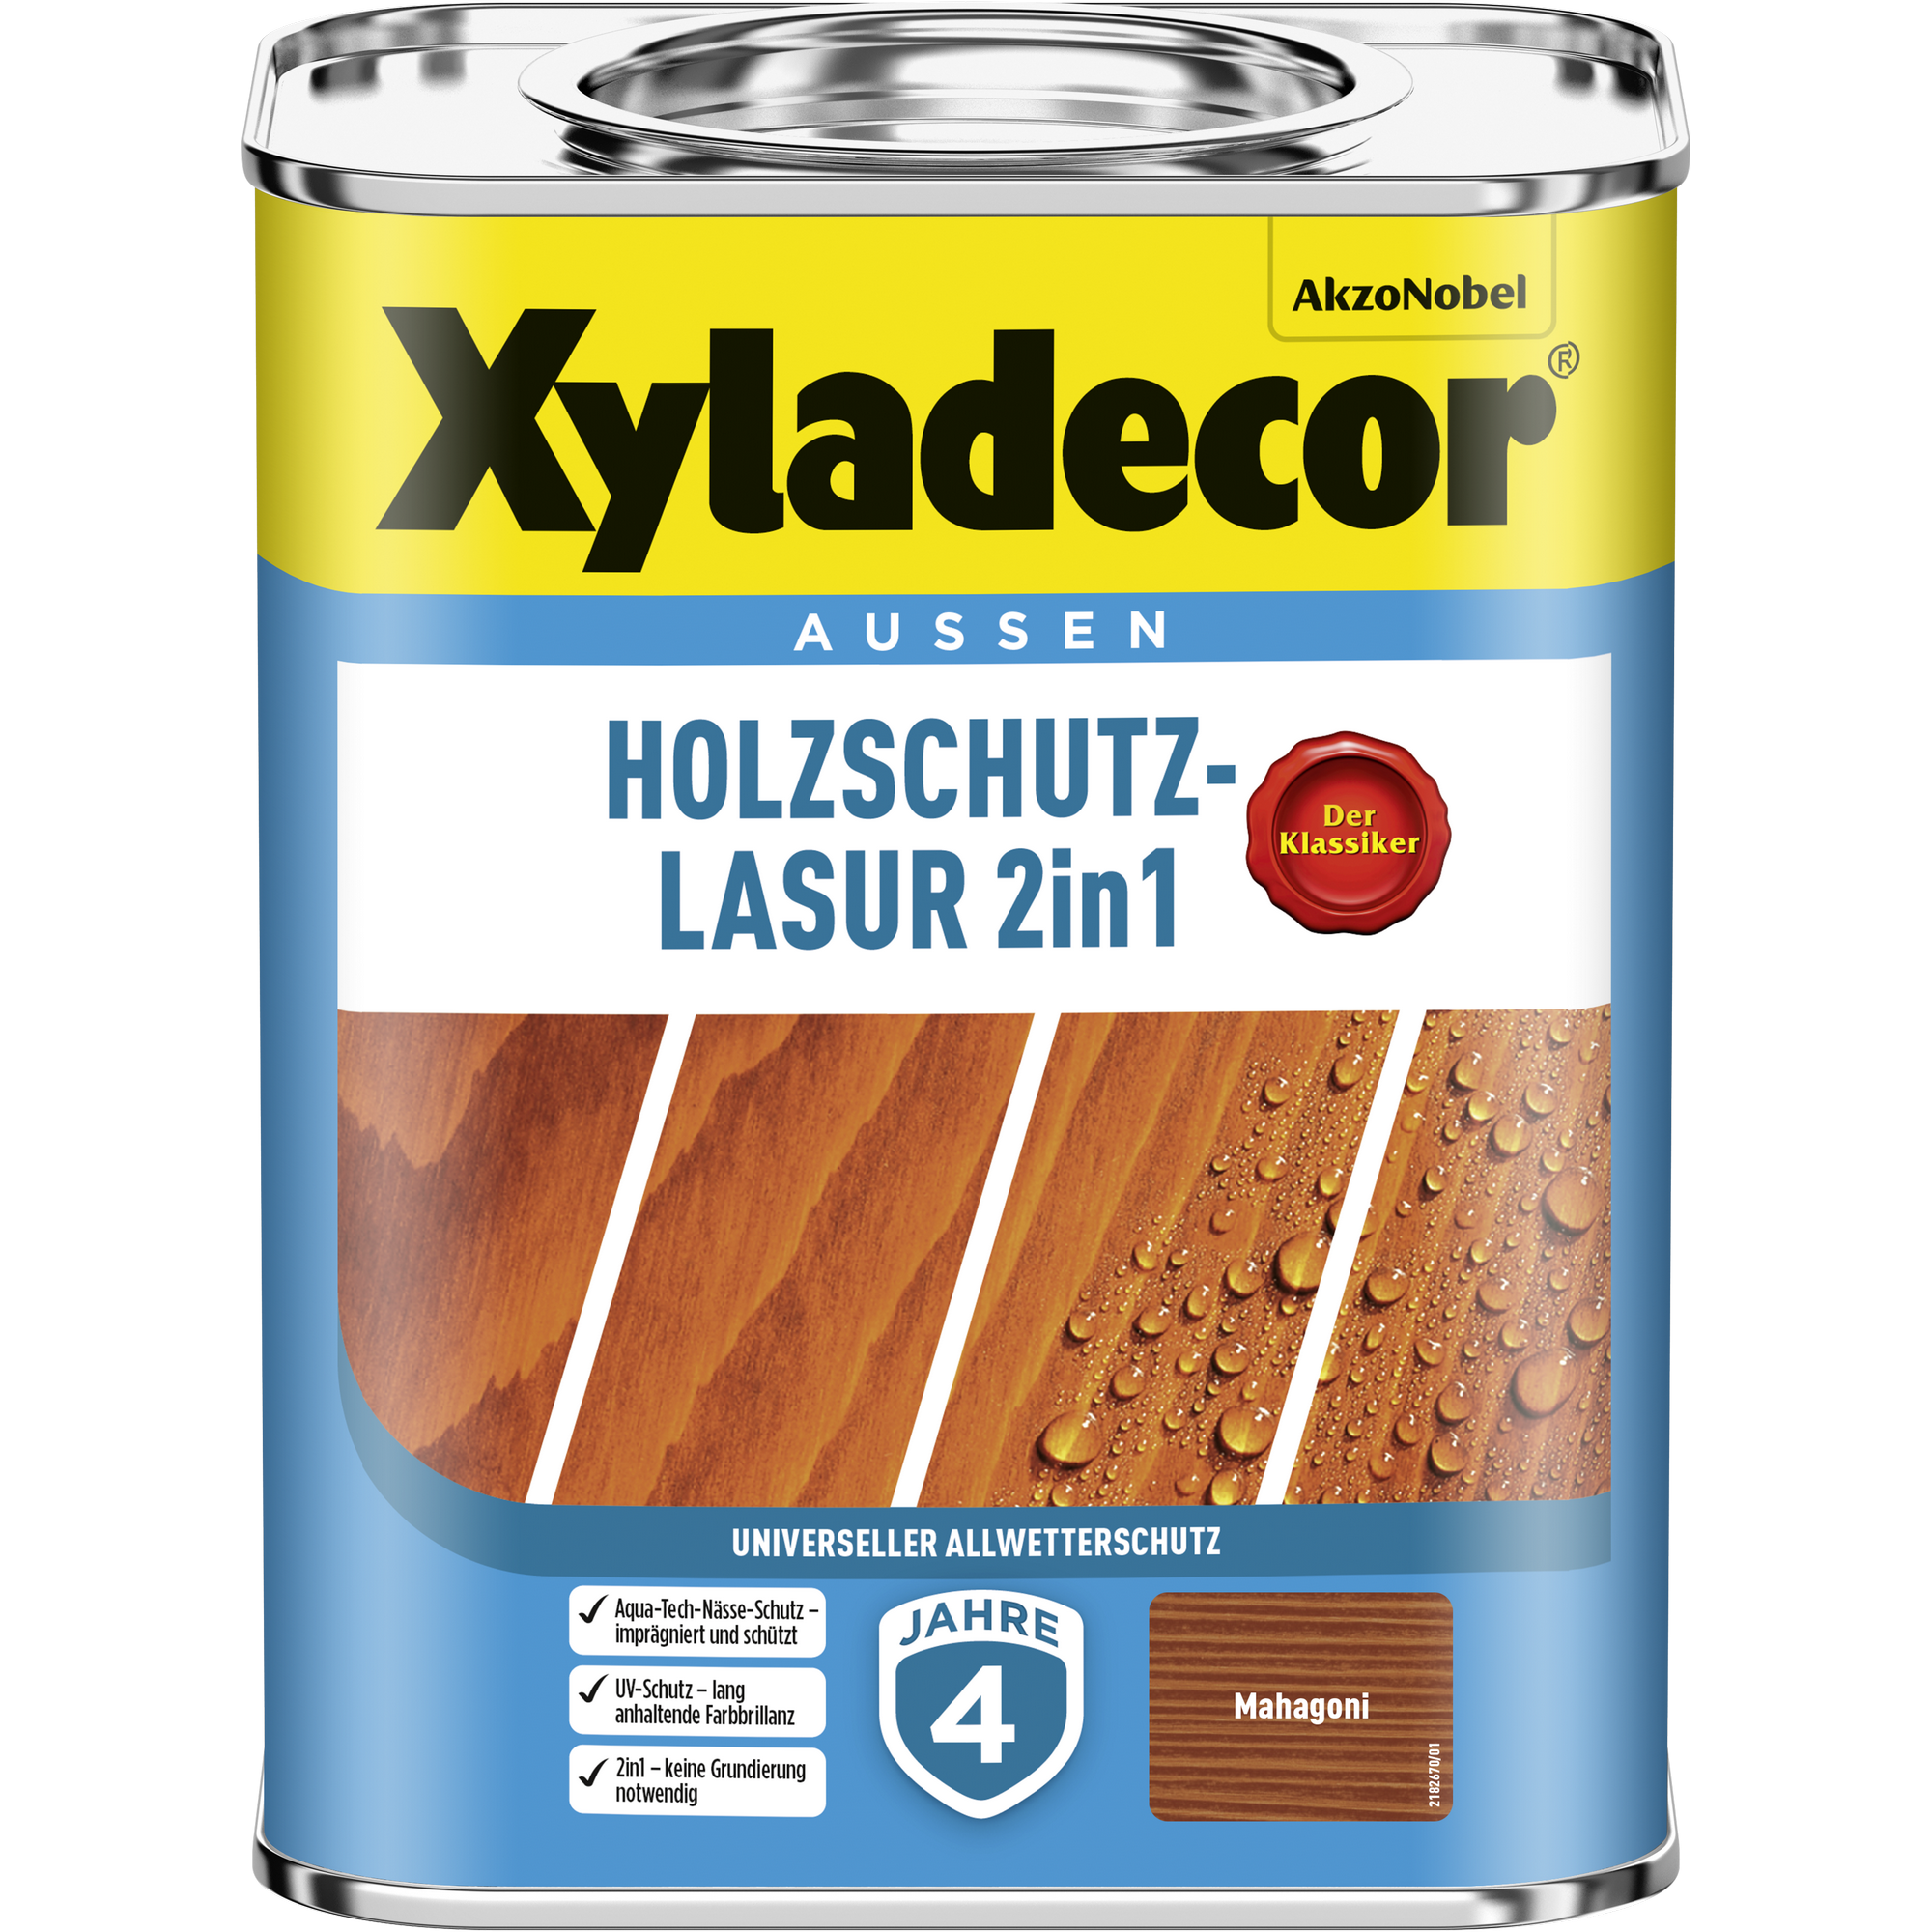 Xyladecor 2in1 Holzschutzlasur mahagonifarben 750 ml